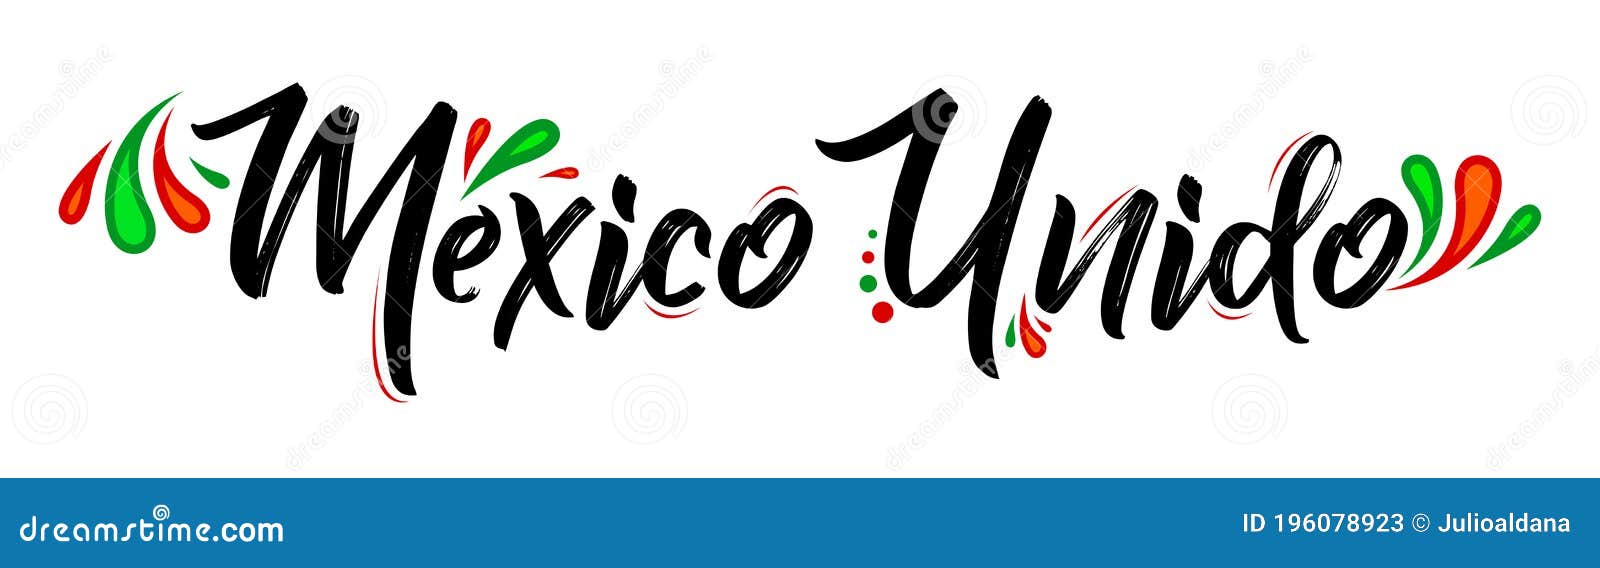 mexico unido united mexico spanish  text  , together celebration.